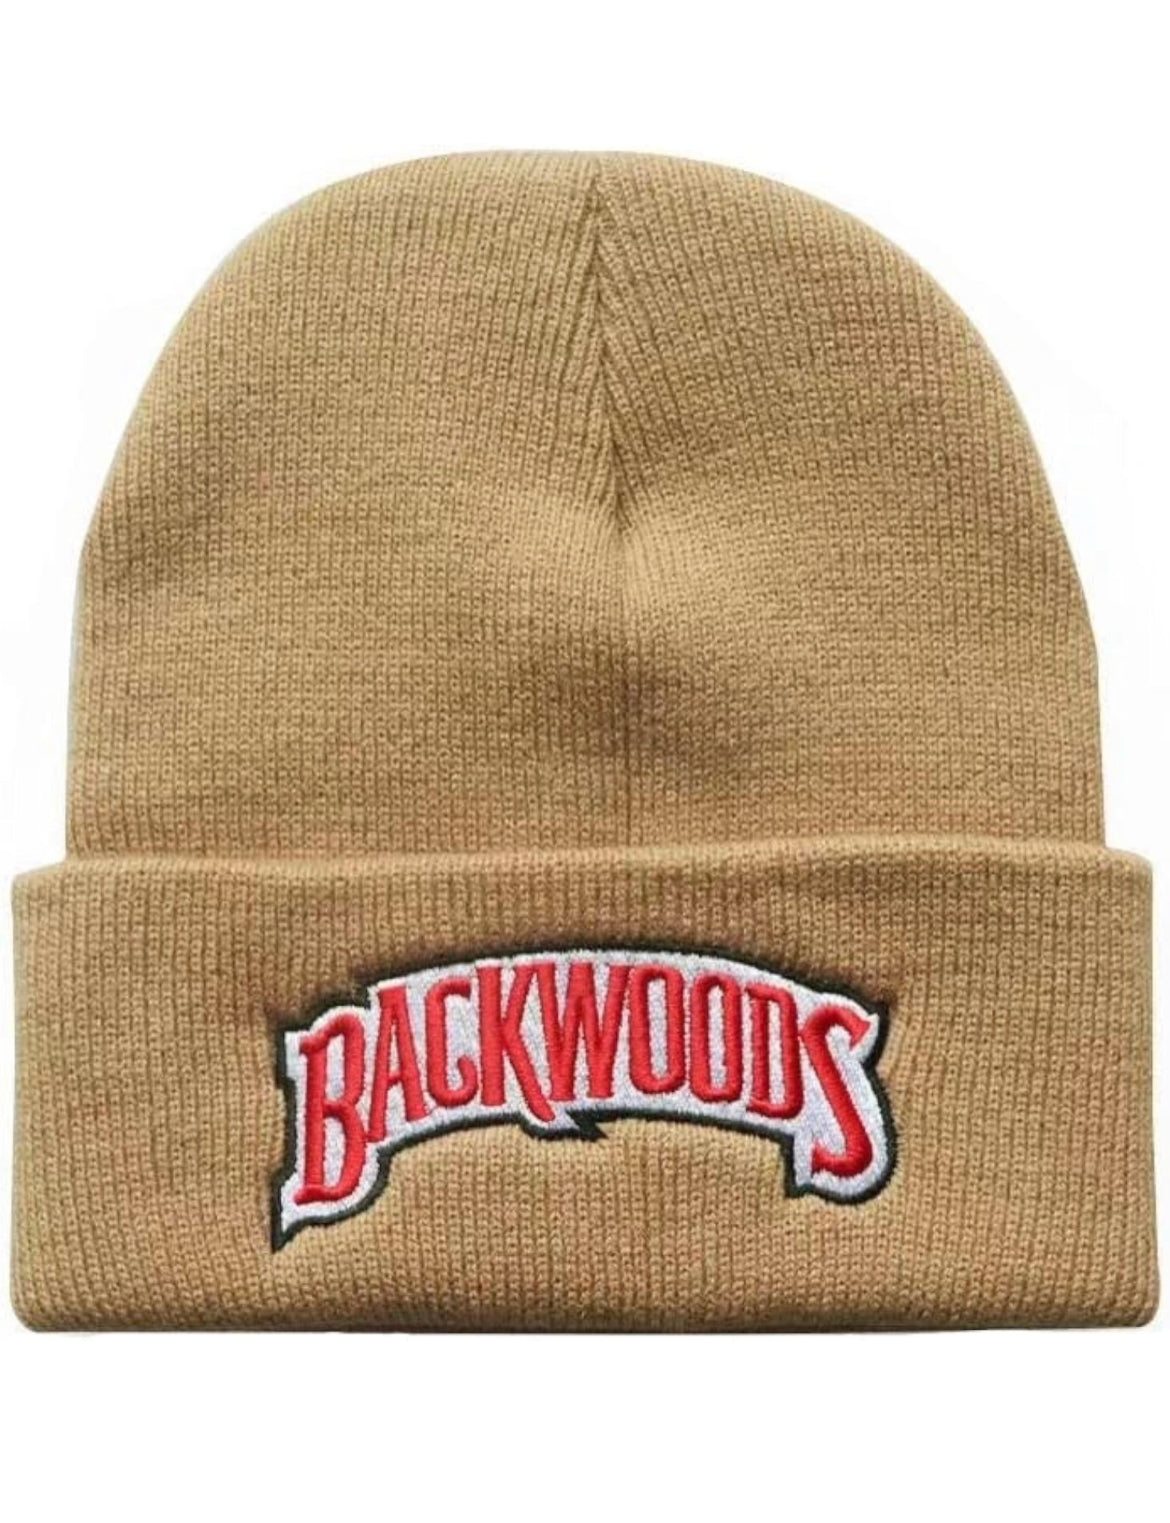 Backwoods Beanie Hat